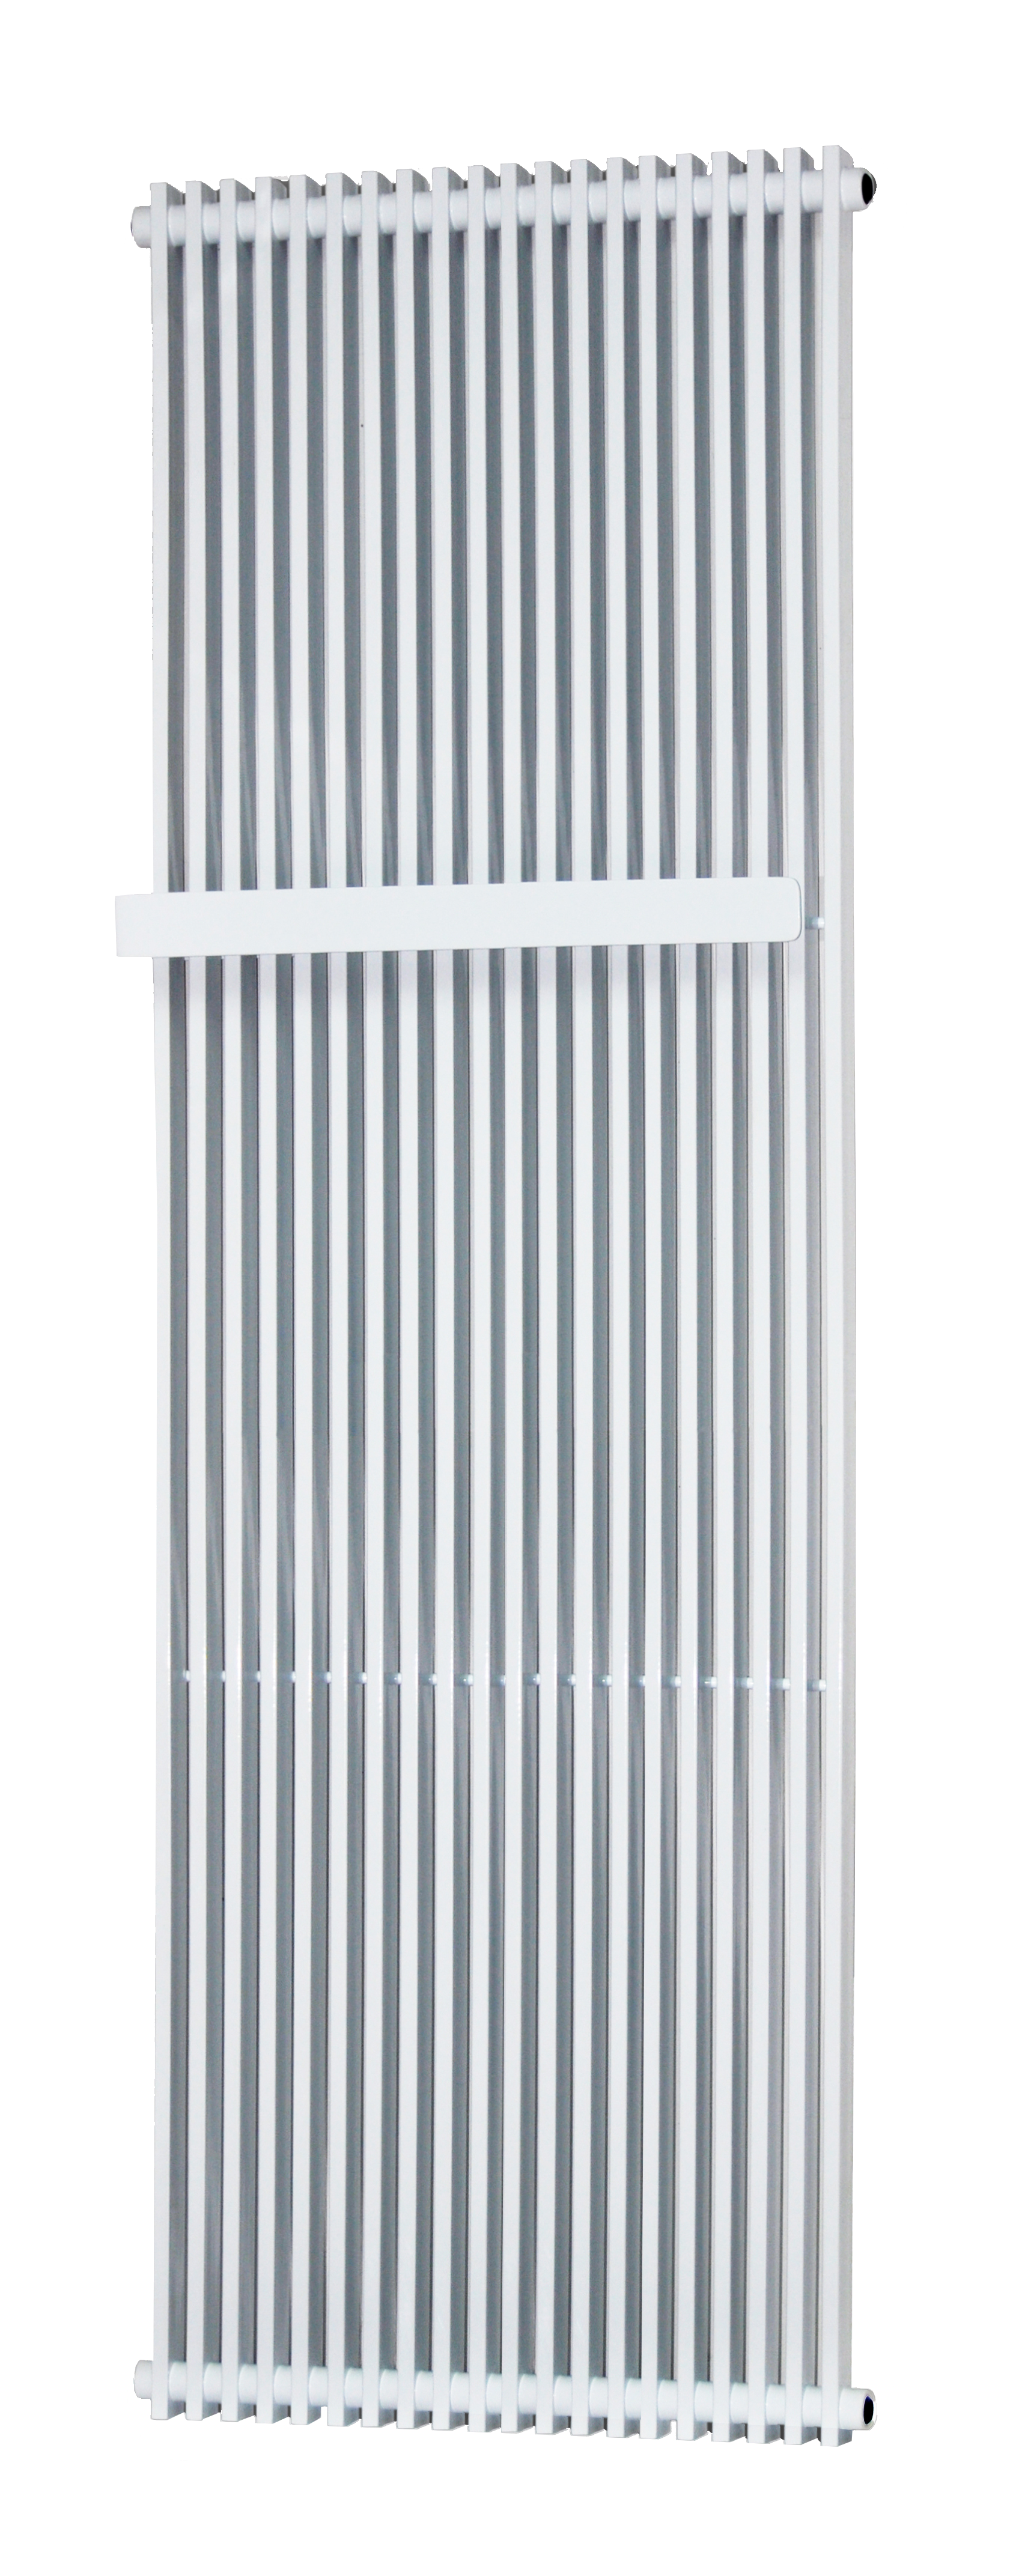 Vipera Corrason Chauffage central blanc 60 x 180 cm 3468 W